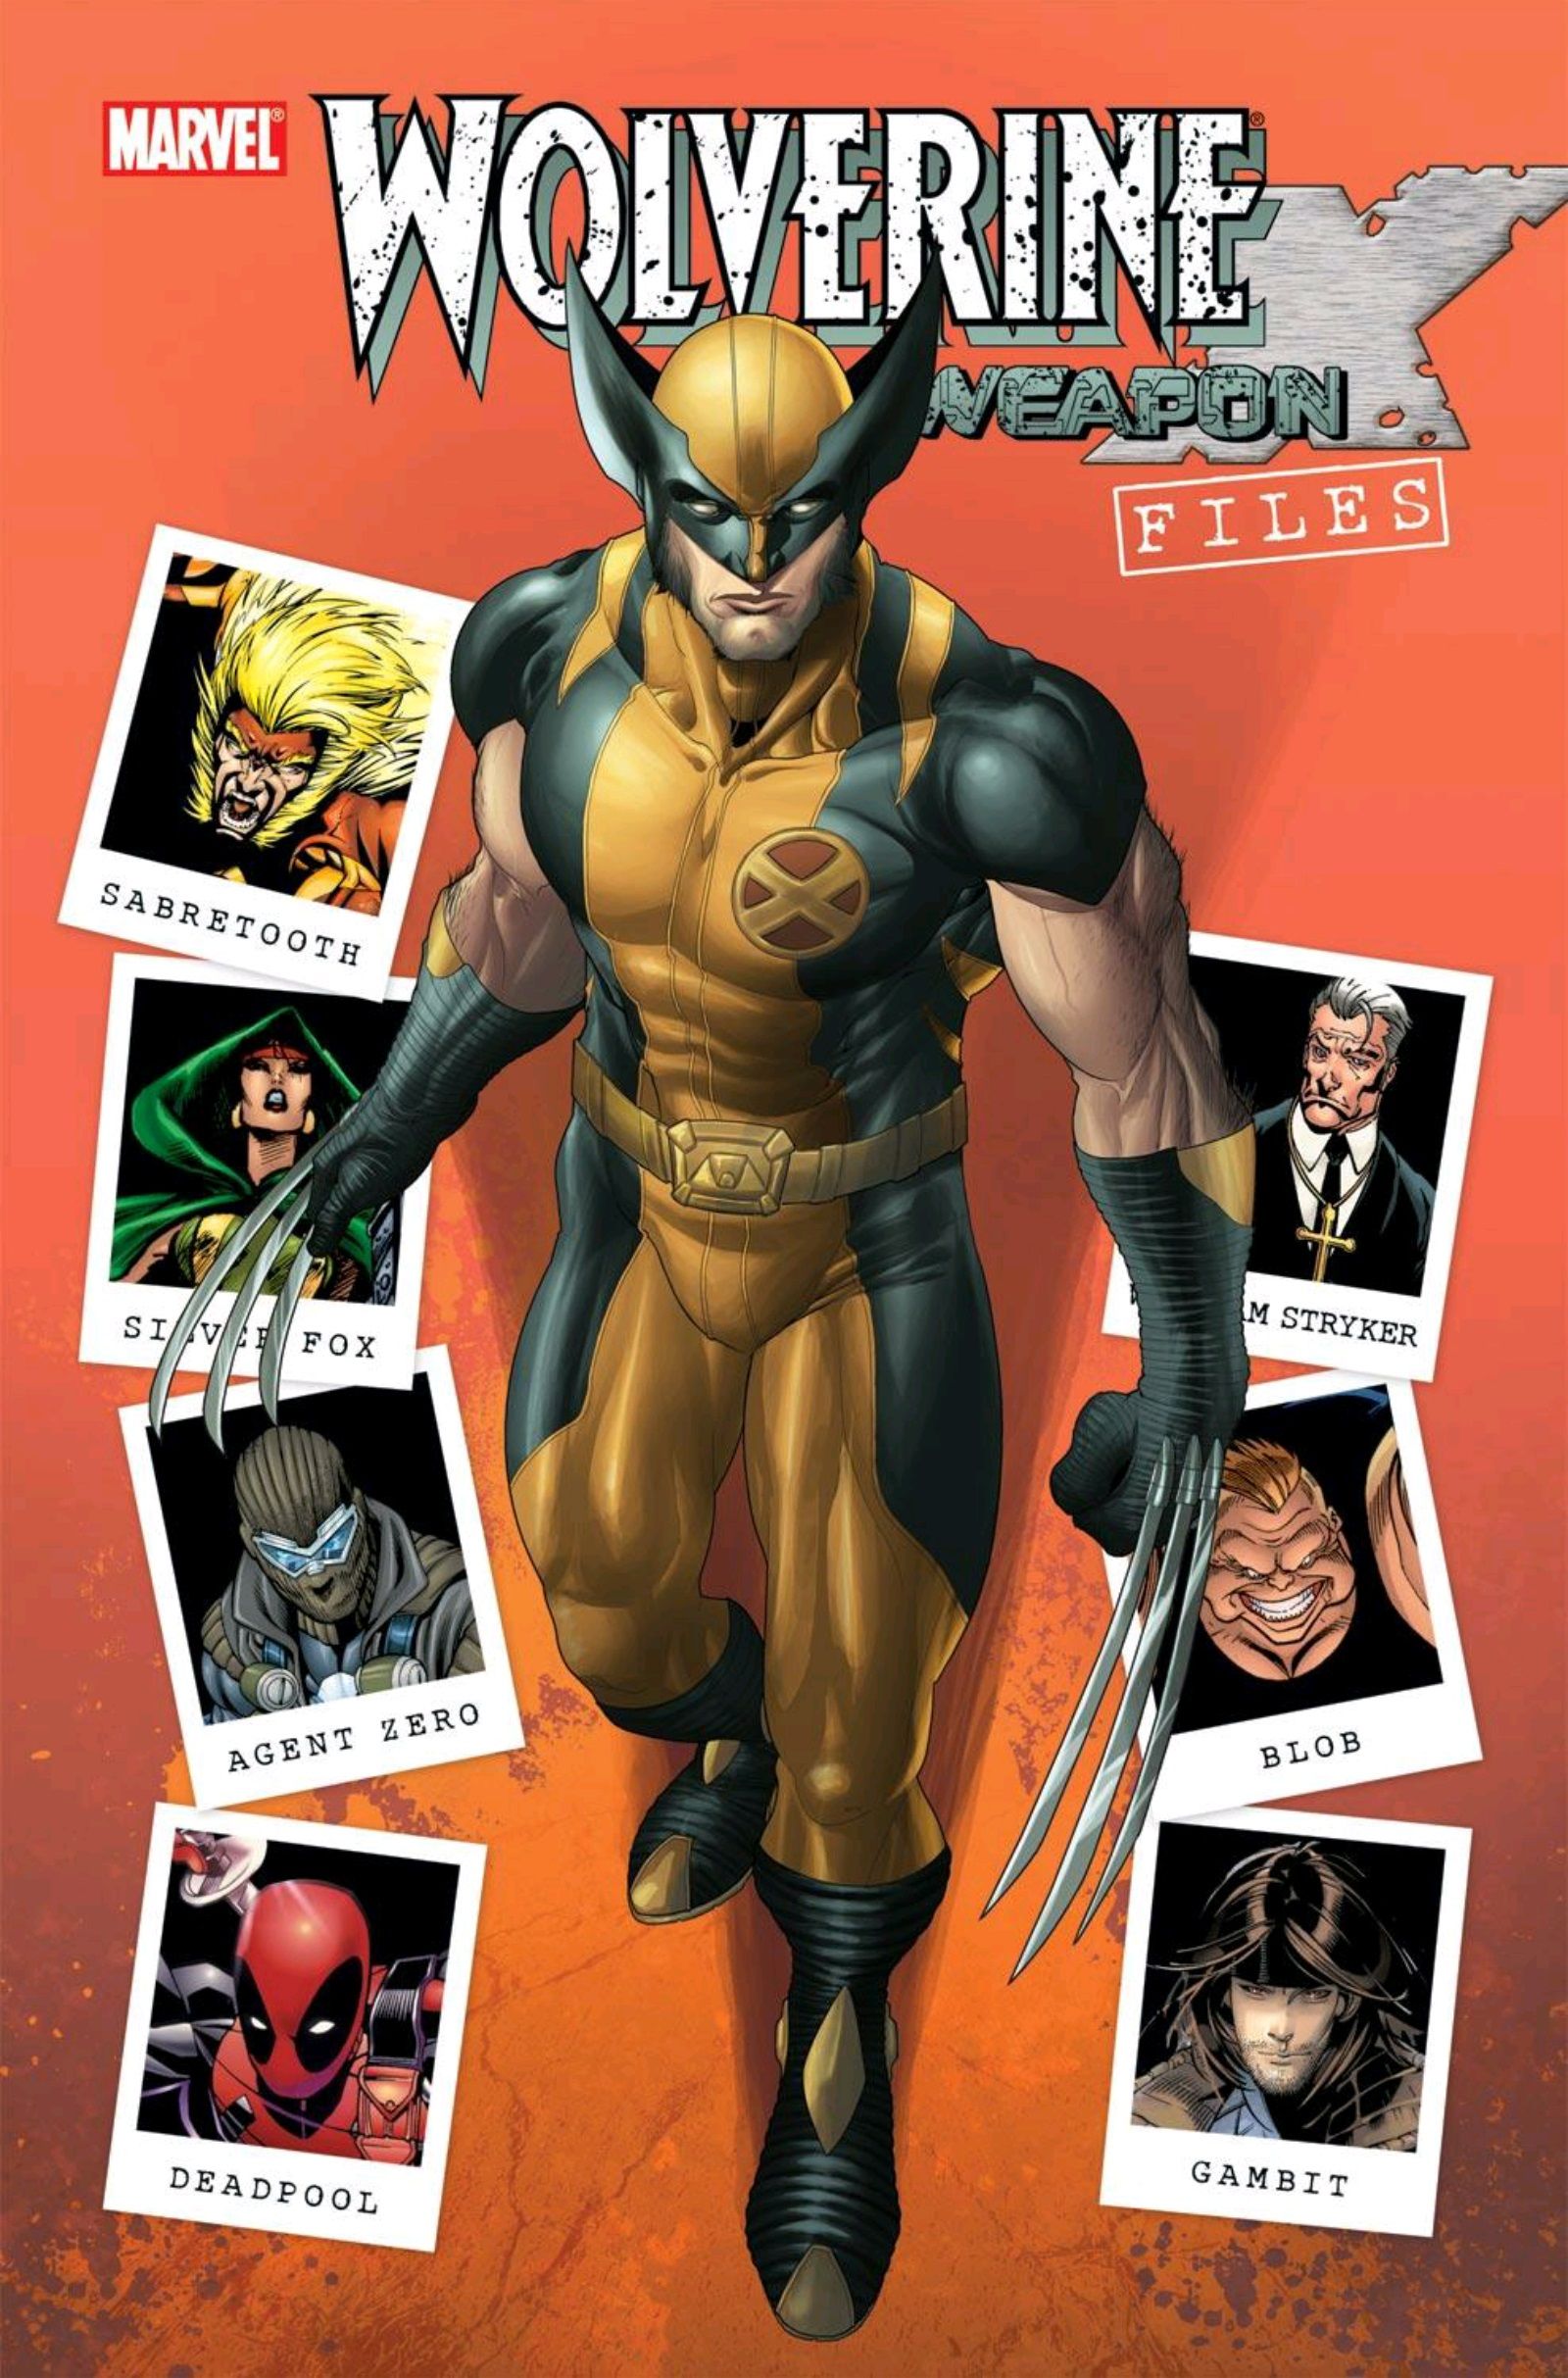 Wolverine: Weapon X wallpaper, Comics, HQ Wolverine: Weapon X pictureK Wallpaper 2019